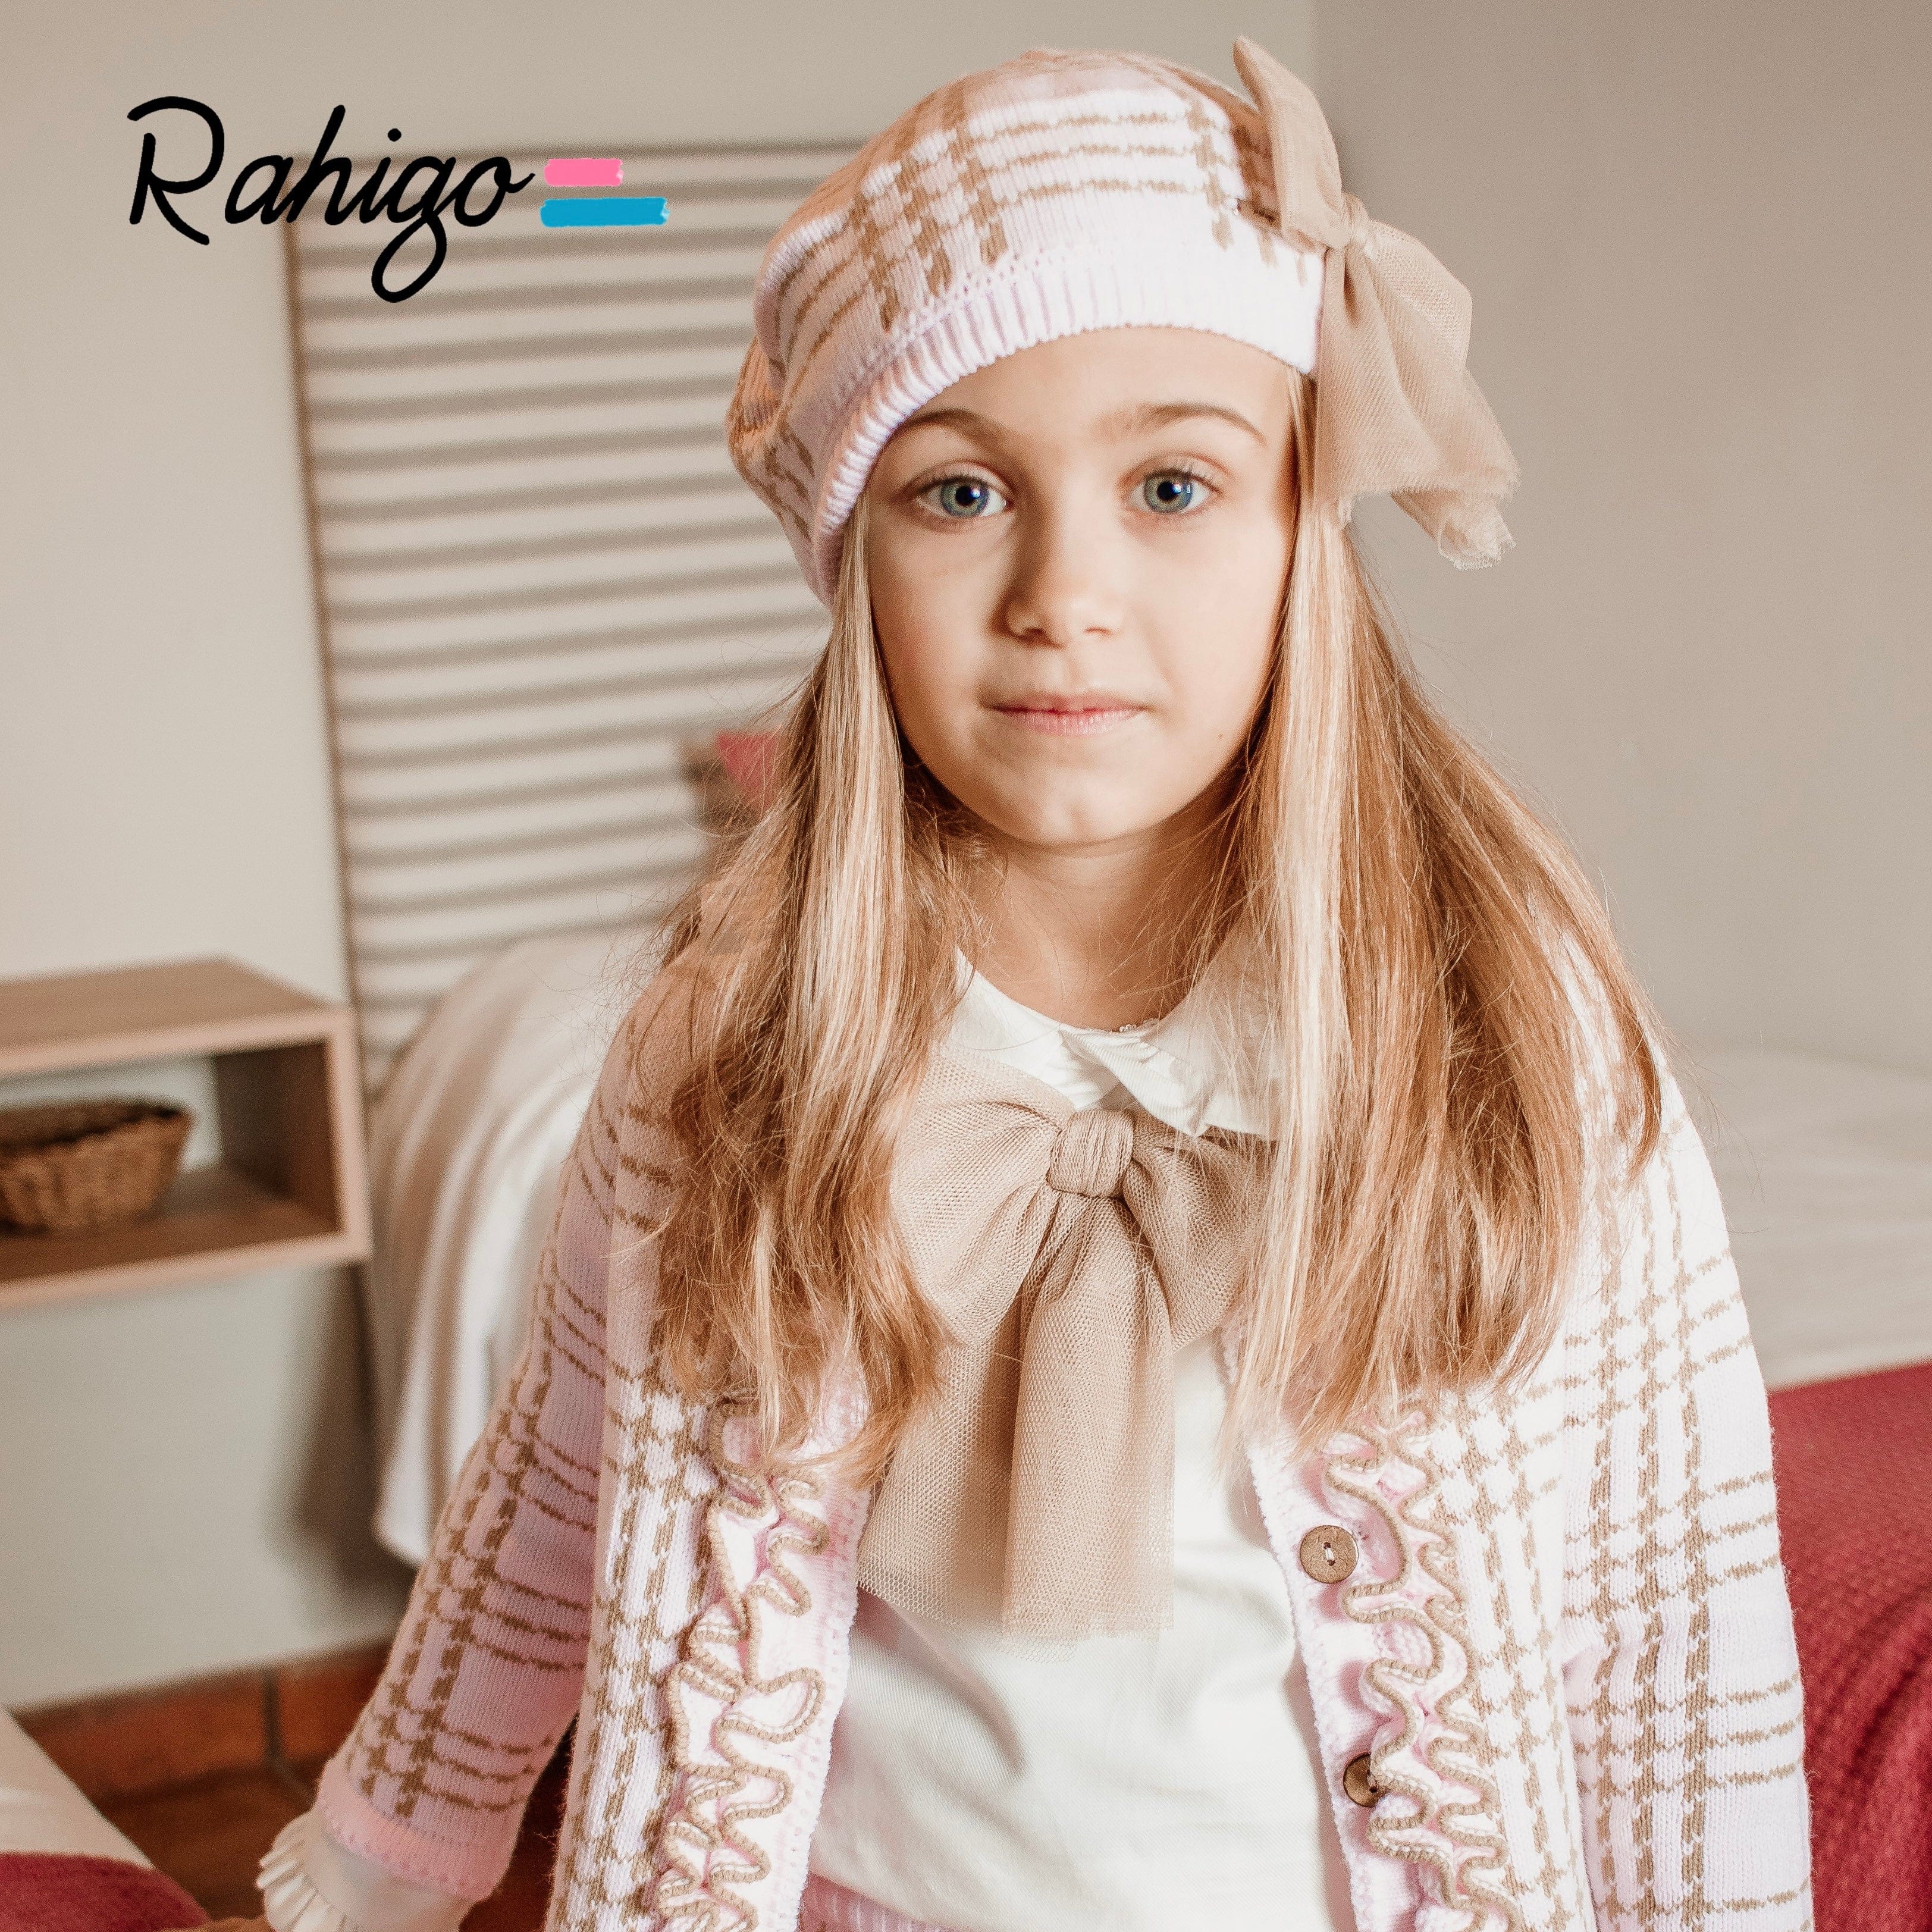 Rahigo - Five Piece Check Skirt Set  -  Baby Pink